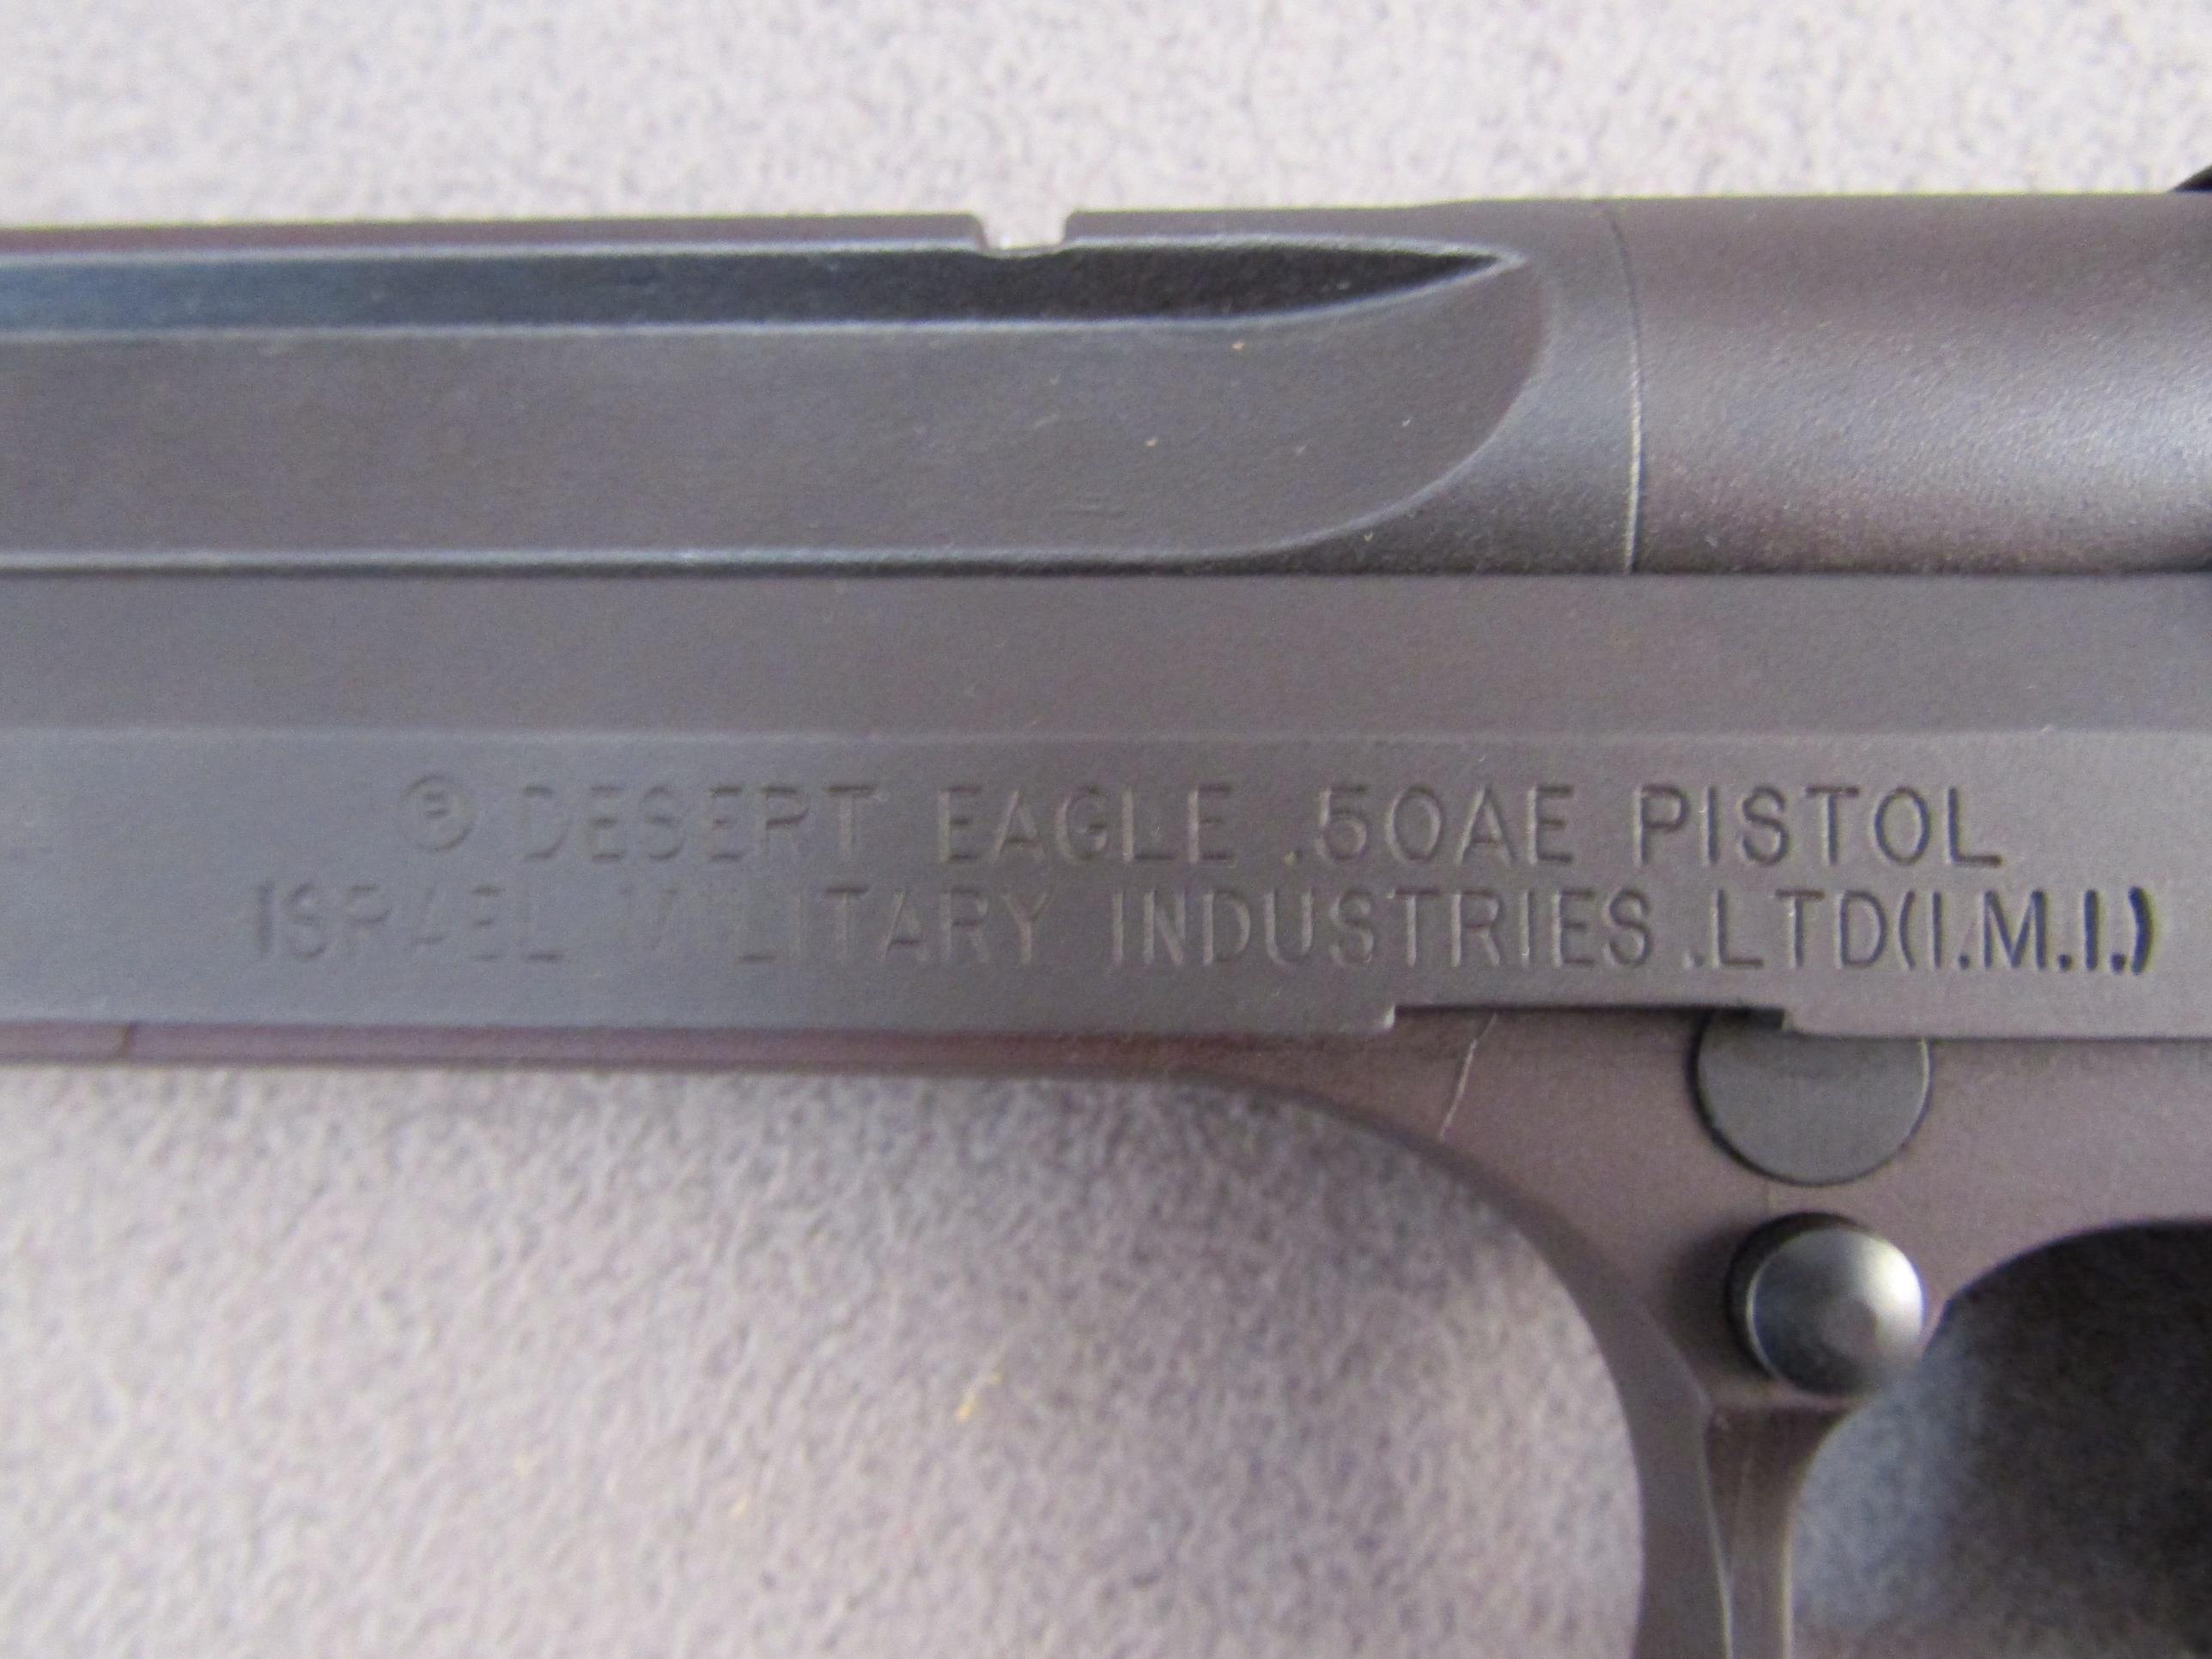 handgun: IMI Model Desert Eagle, Semi-Auto Pistol, .50AE, 7 shot, 6.5" barrel, S#95258296